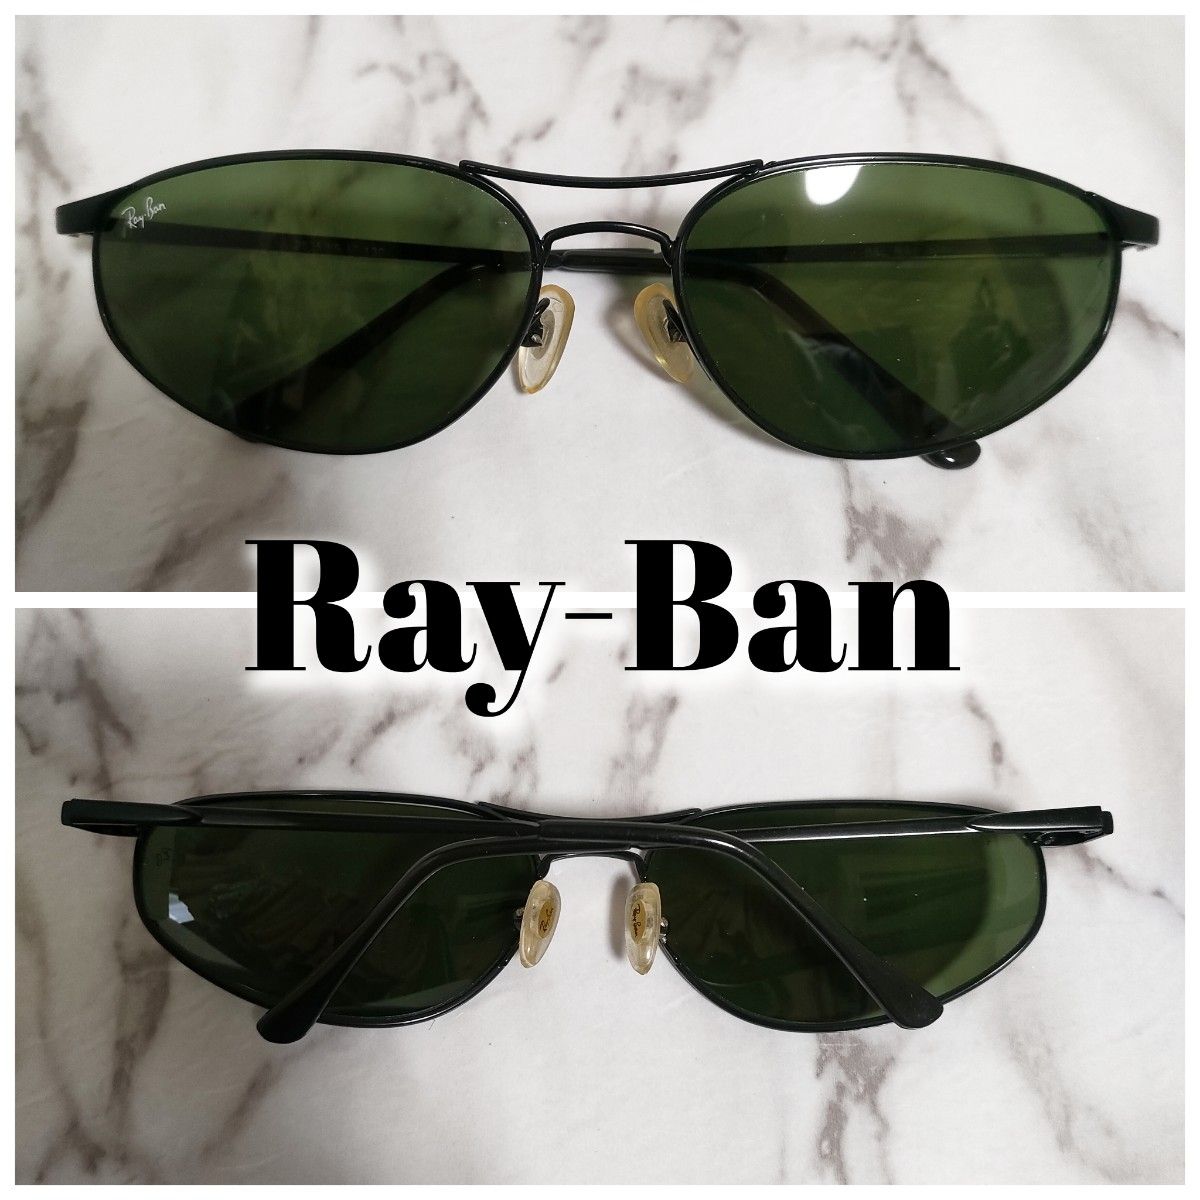 Ray-Ban/レイバン/B&L/サングラス/匿名配送/送料無料